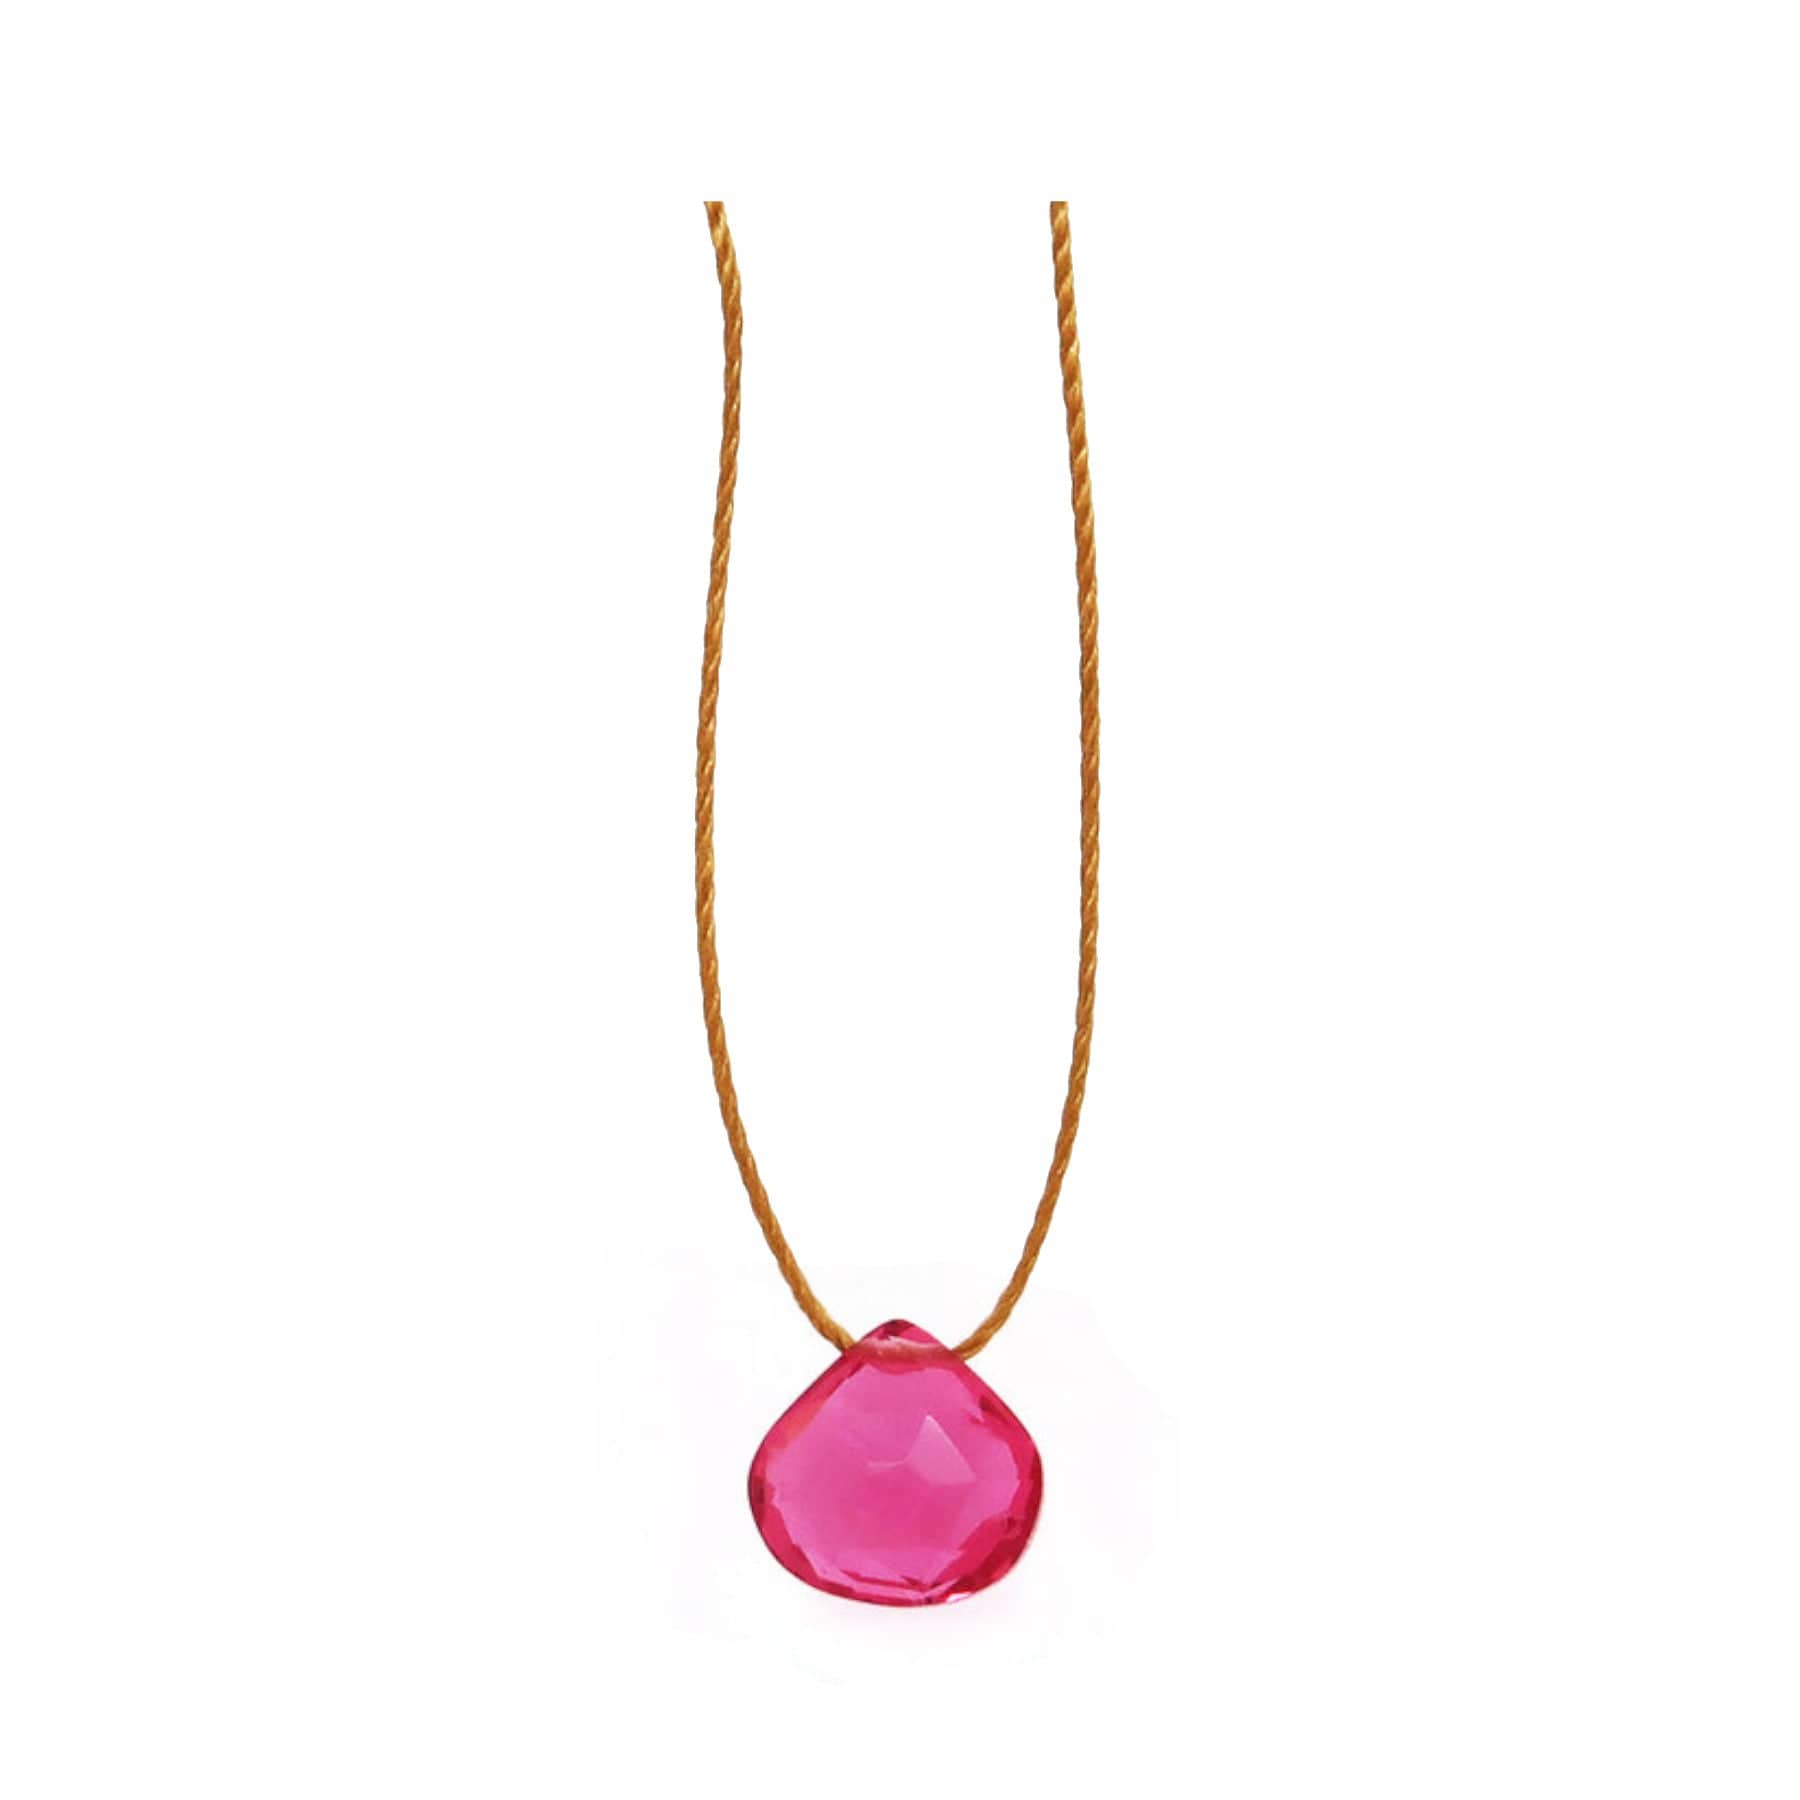 Elegant pink gemstone pendant on gold chain necklace isolated on white background